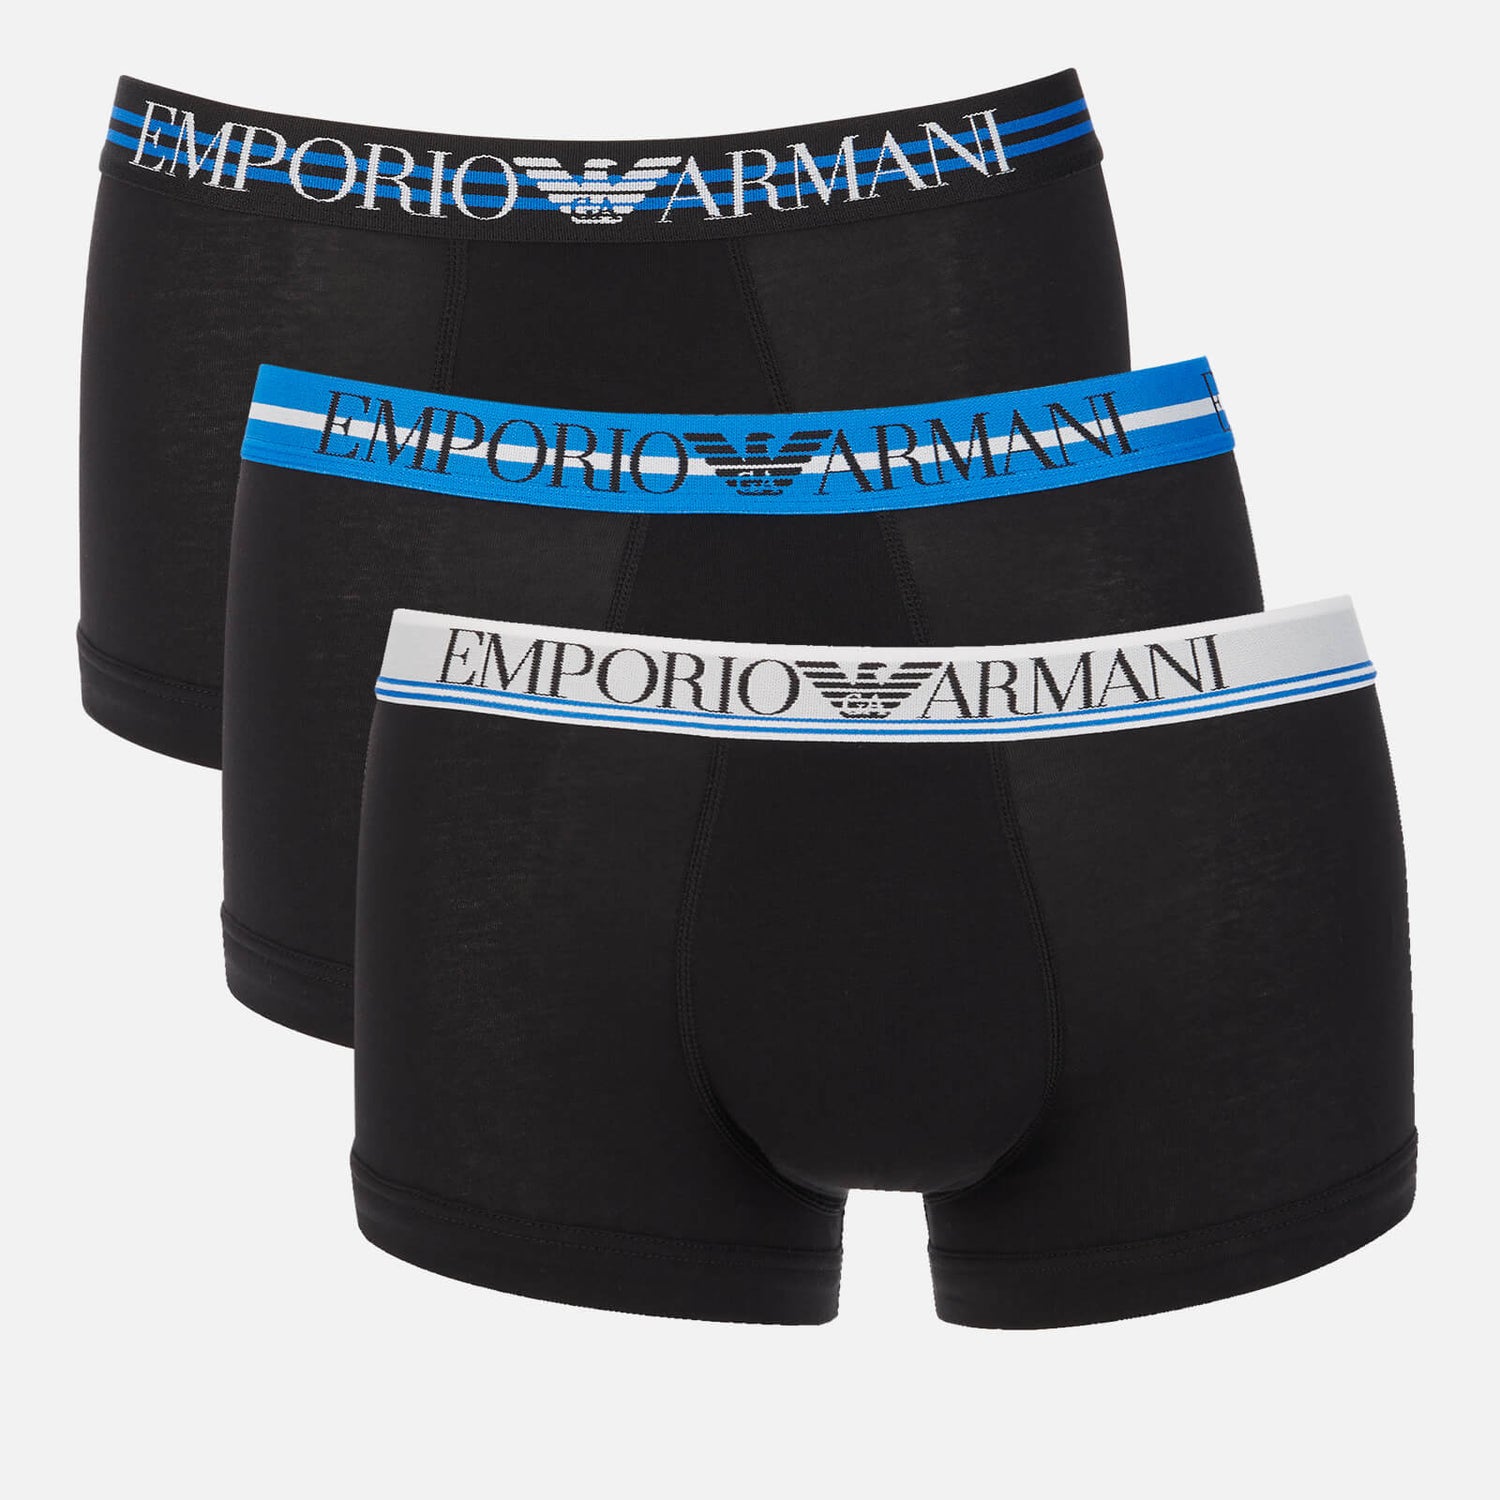 Emporio Armani Men's 3-Pack Mixed Waistband Trunks - Black - S